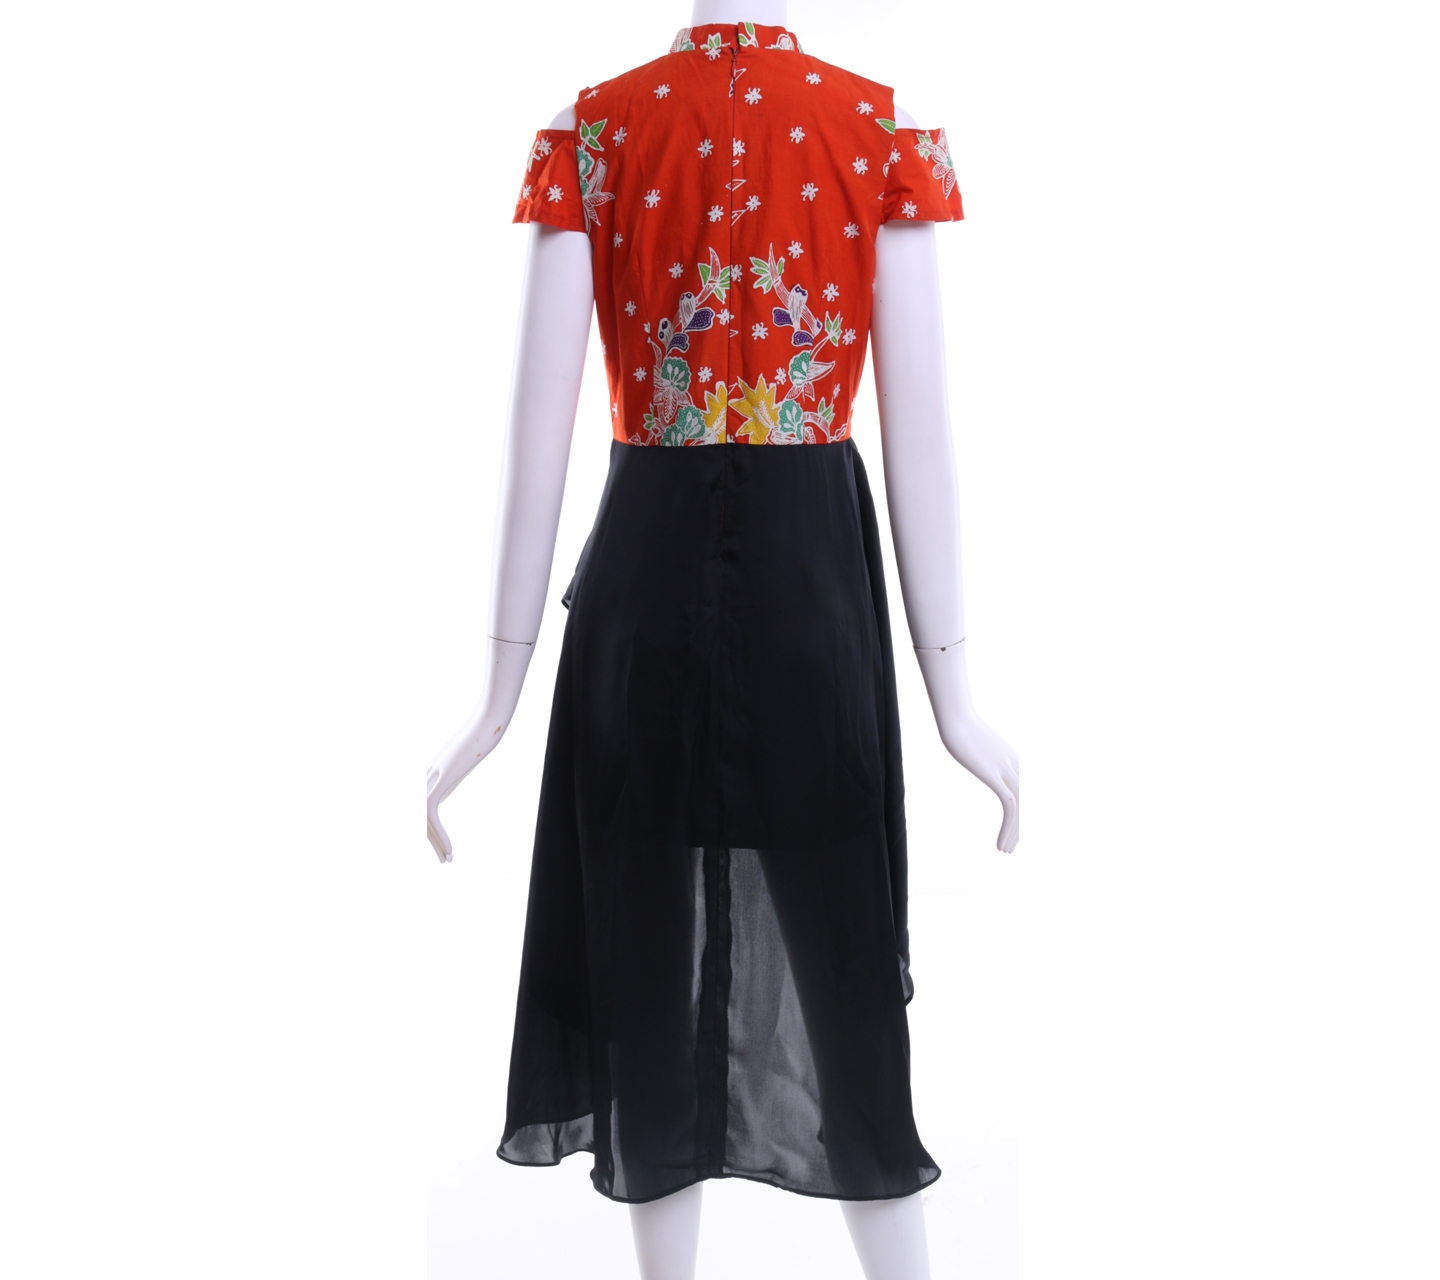 Kencana Pajajaran Orange And Black Floral Beads Mini Dress